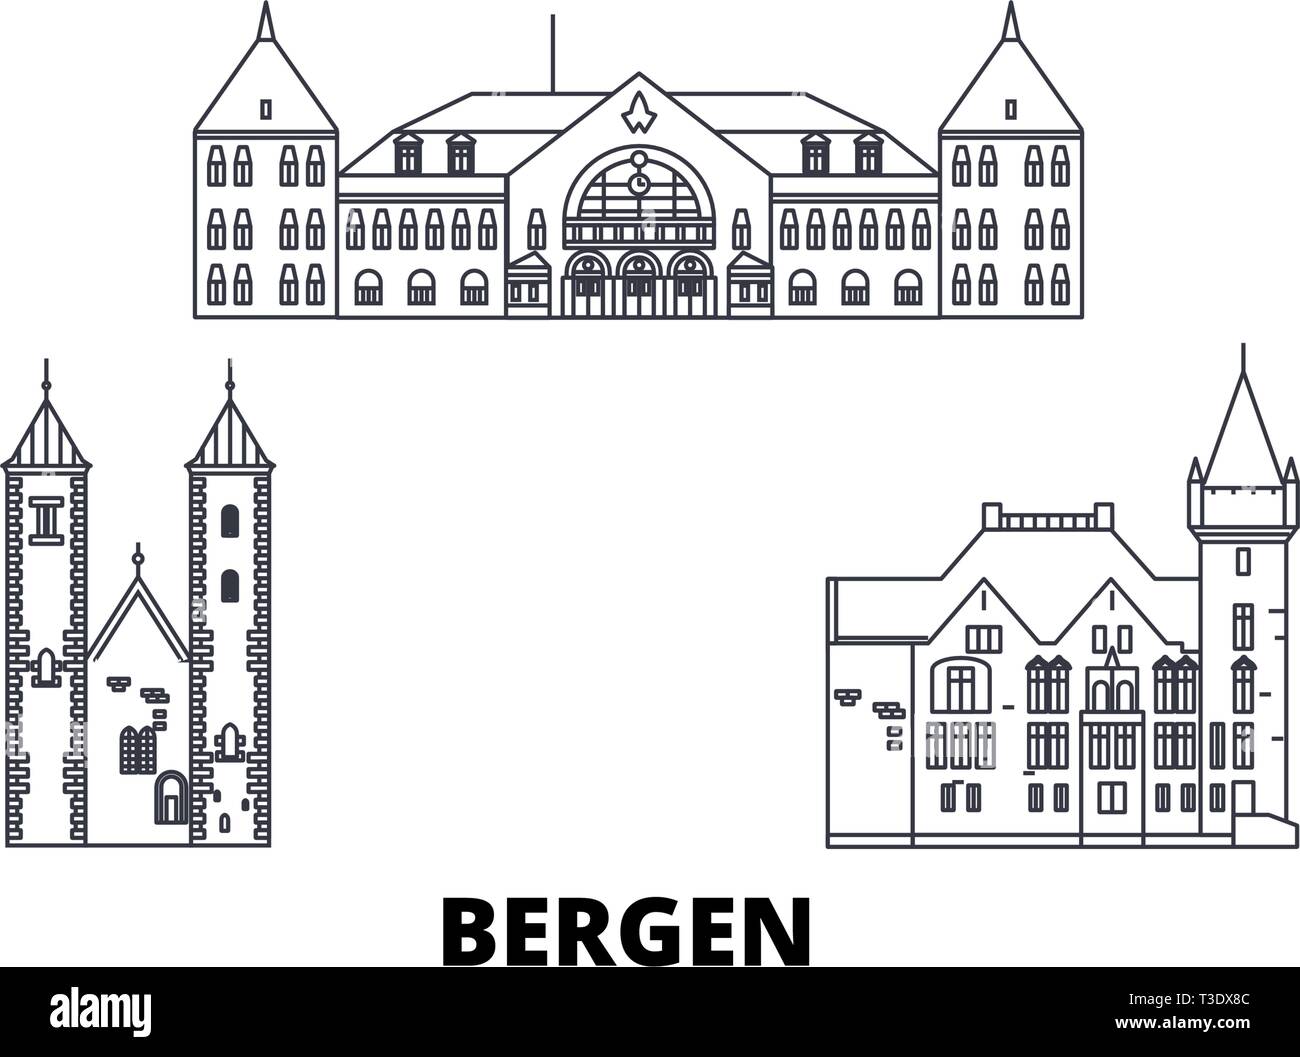 Norway, Bergen line travel skyline set. Norway, Bergen outline city vector illustration, symbol, travel sights, landmarks. Stock Vector